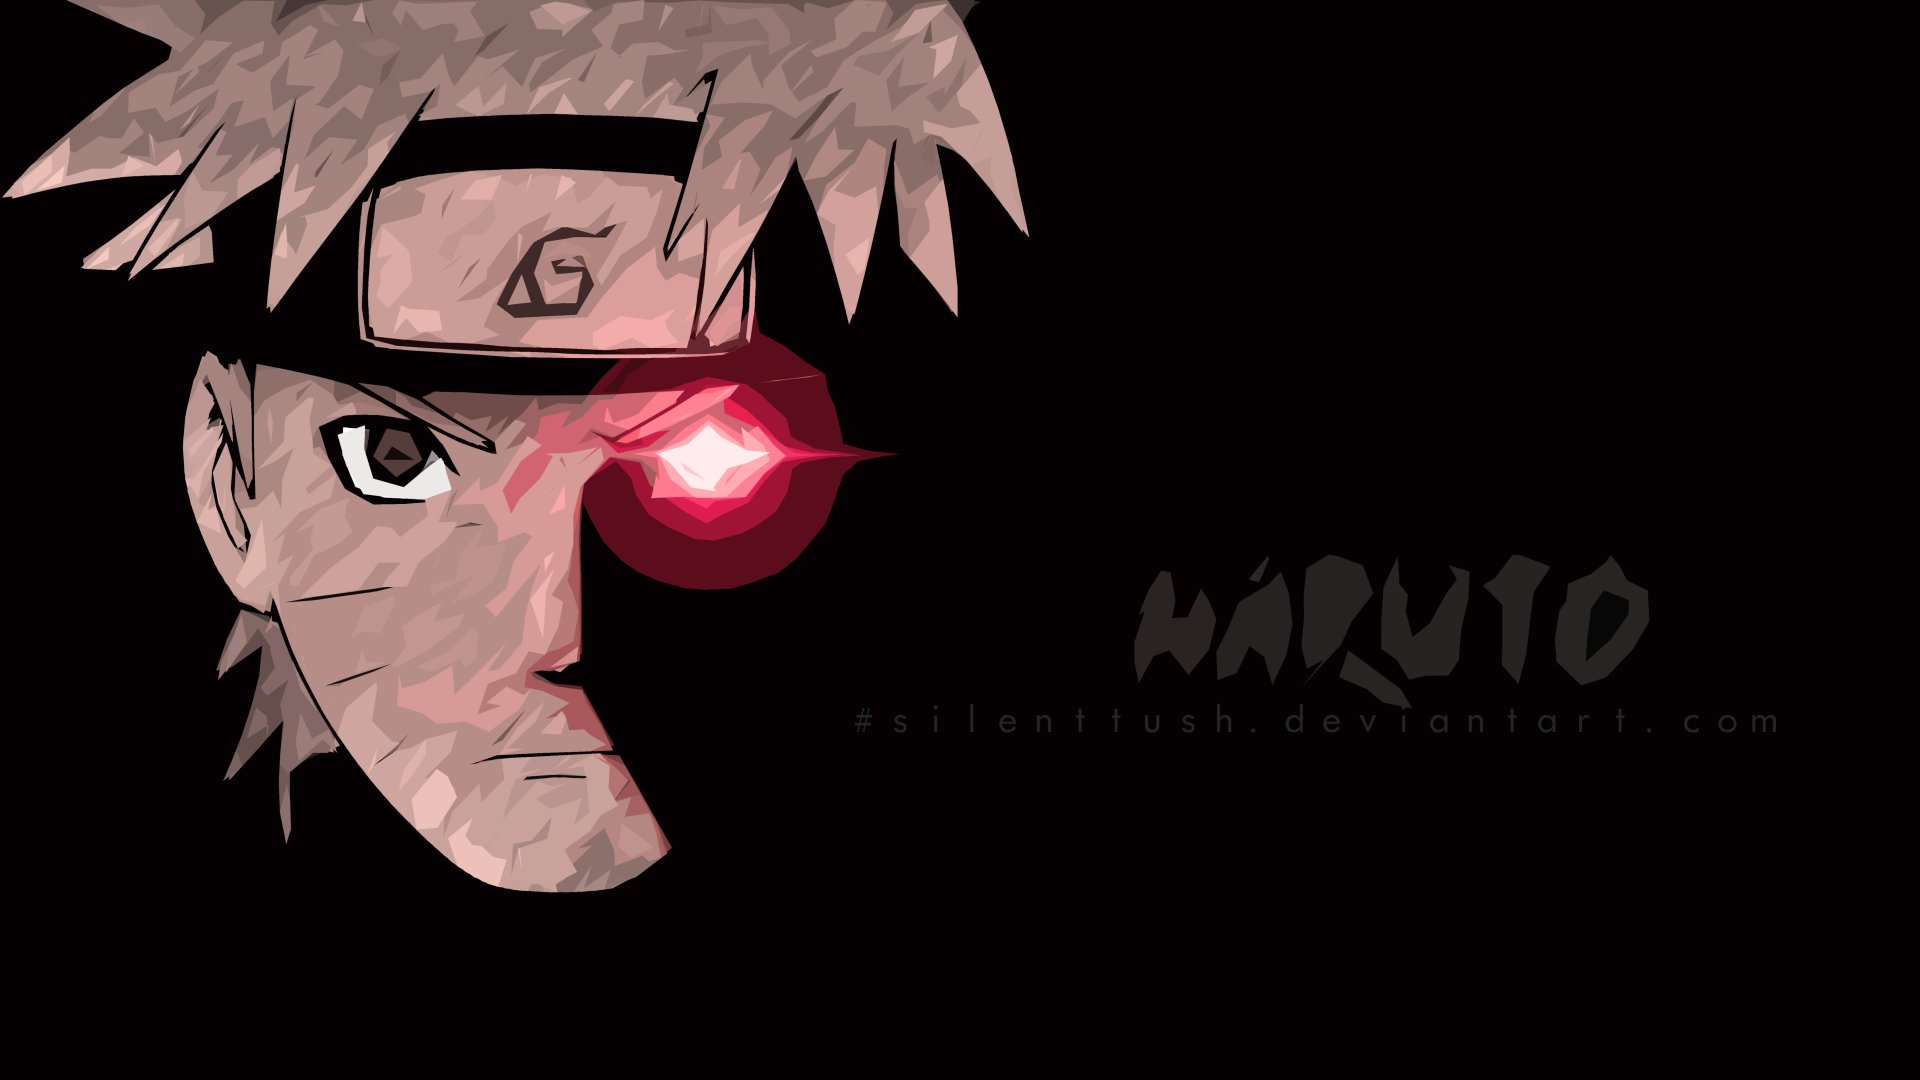 Anime Naruto 8k Ultra HD Wallpaper by xdAayush